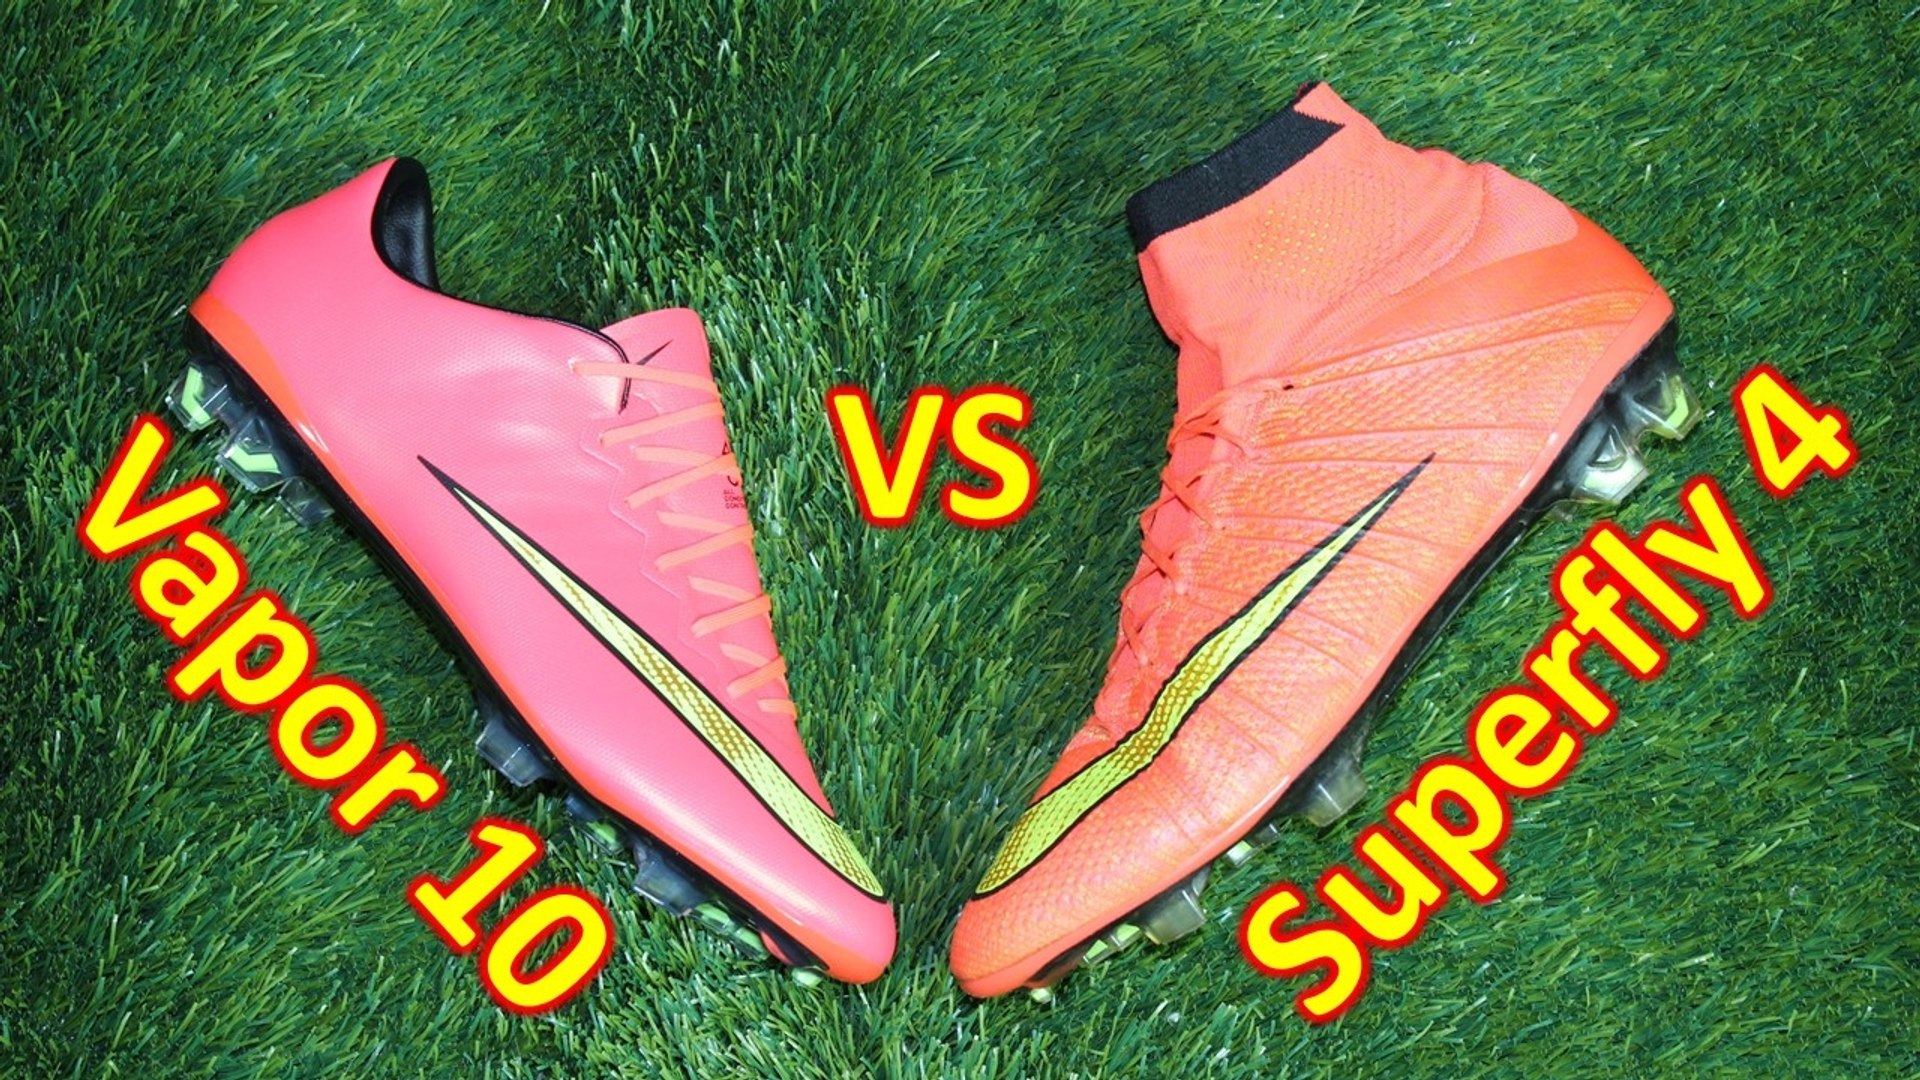 Nike Mercurial Superfly 4 vs Mercurial Vapor 10 Comparison & Review - video  Dailymotion